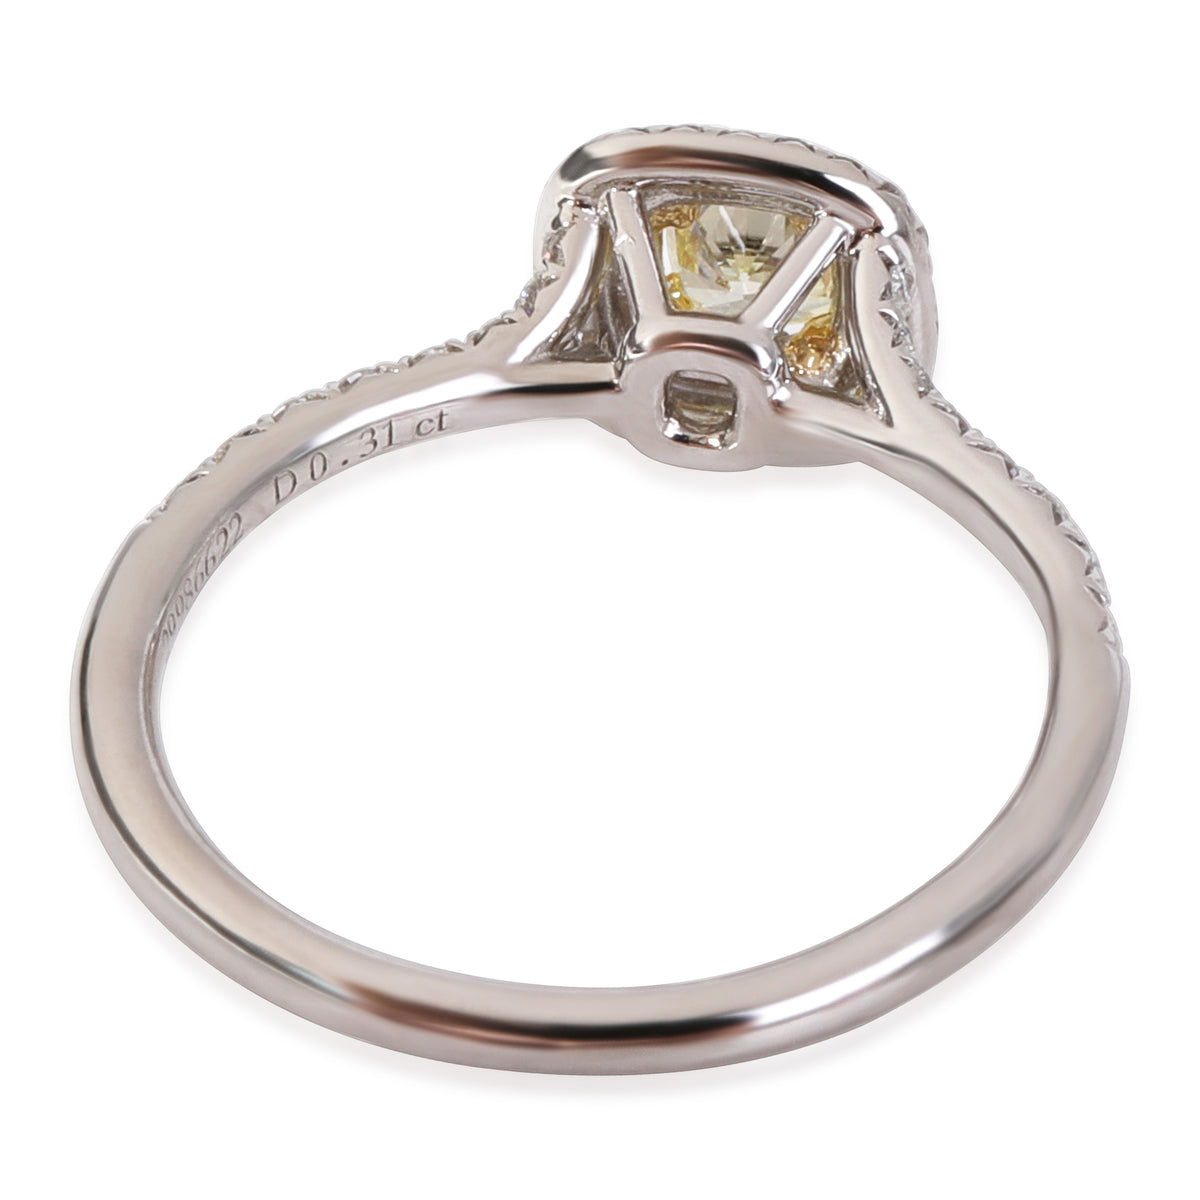 Tiffany & Co. Soleste Fancy Yellow Diamond Engagement Ring in Platinum 0.56 ctw